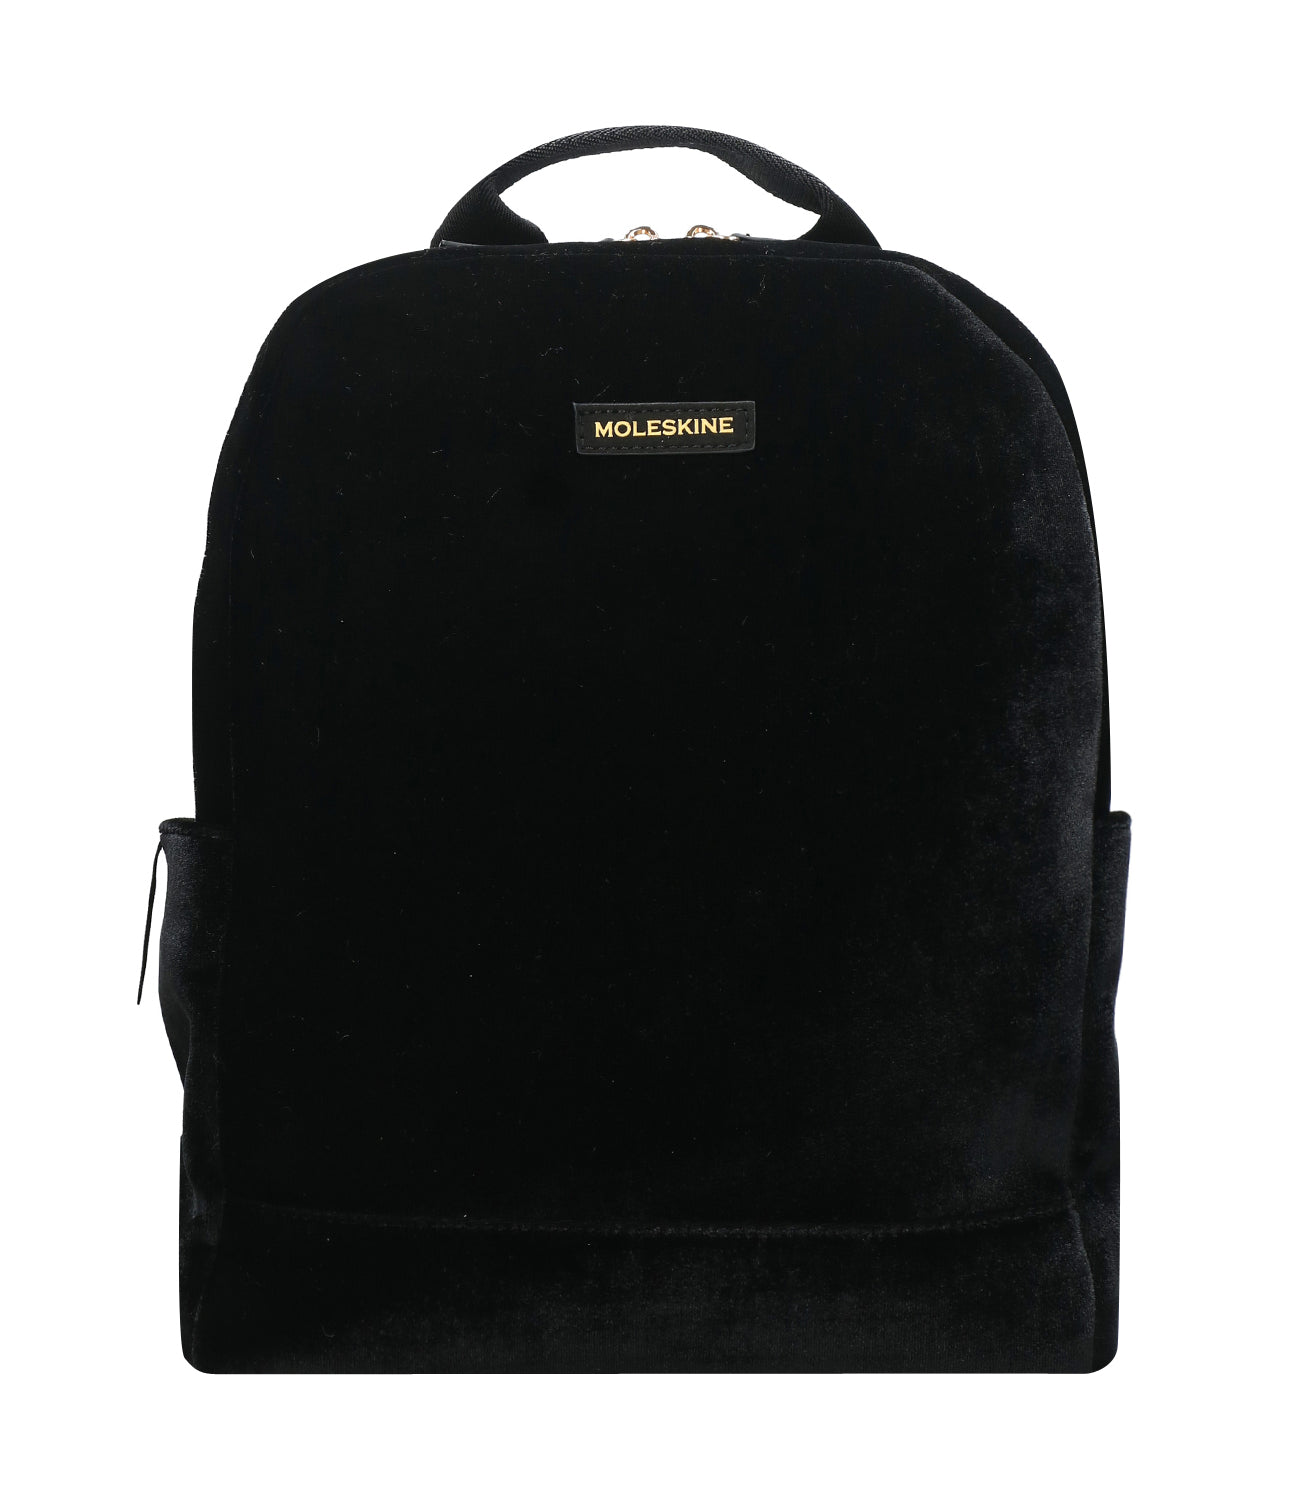 Moleskine | Backpack Black